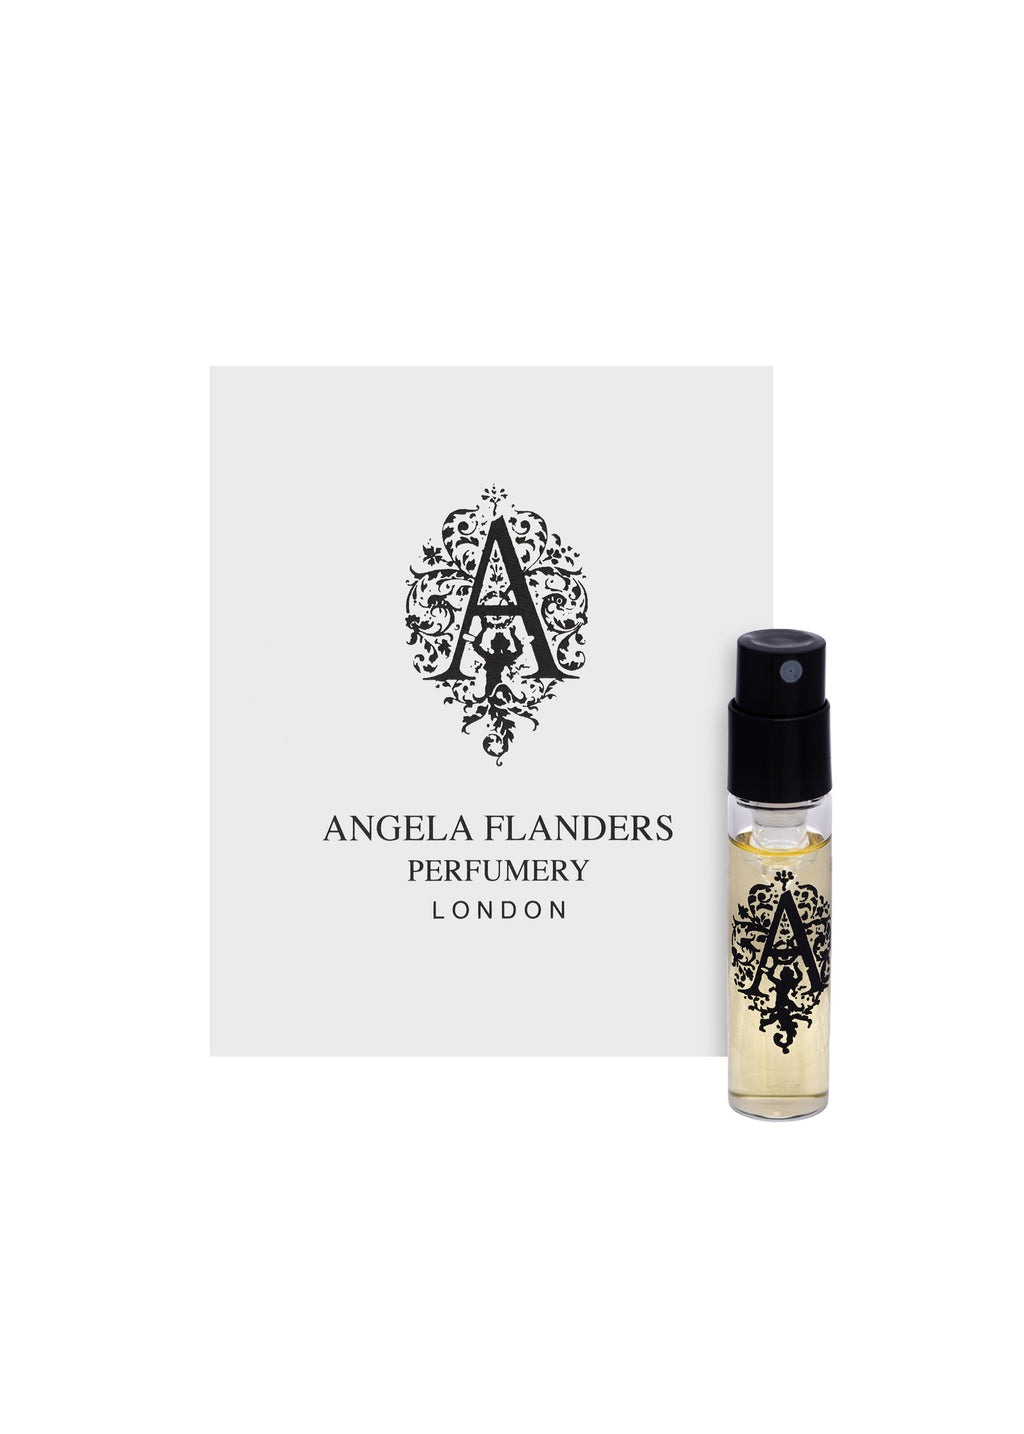 Angela Flanders Artillery No 7 Lavender & Amber Eau de Toilette